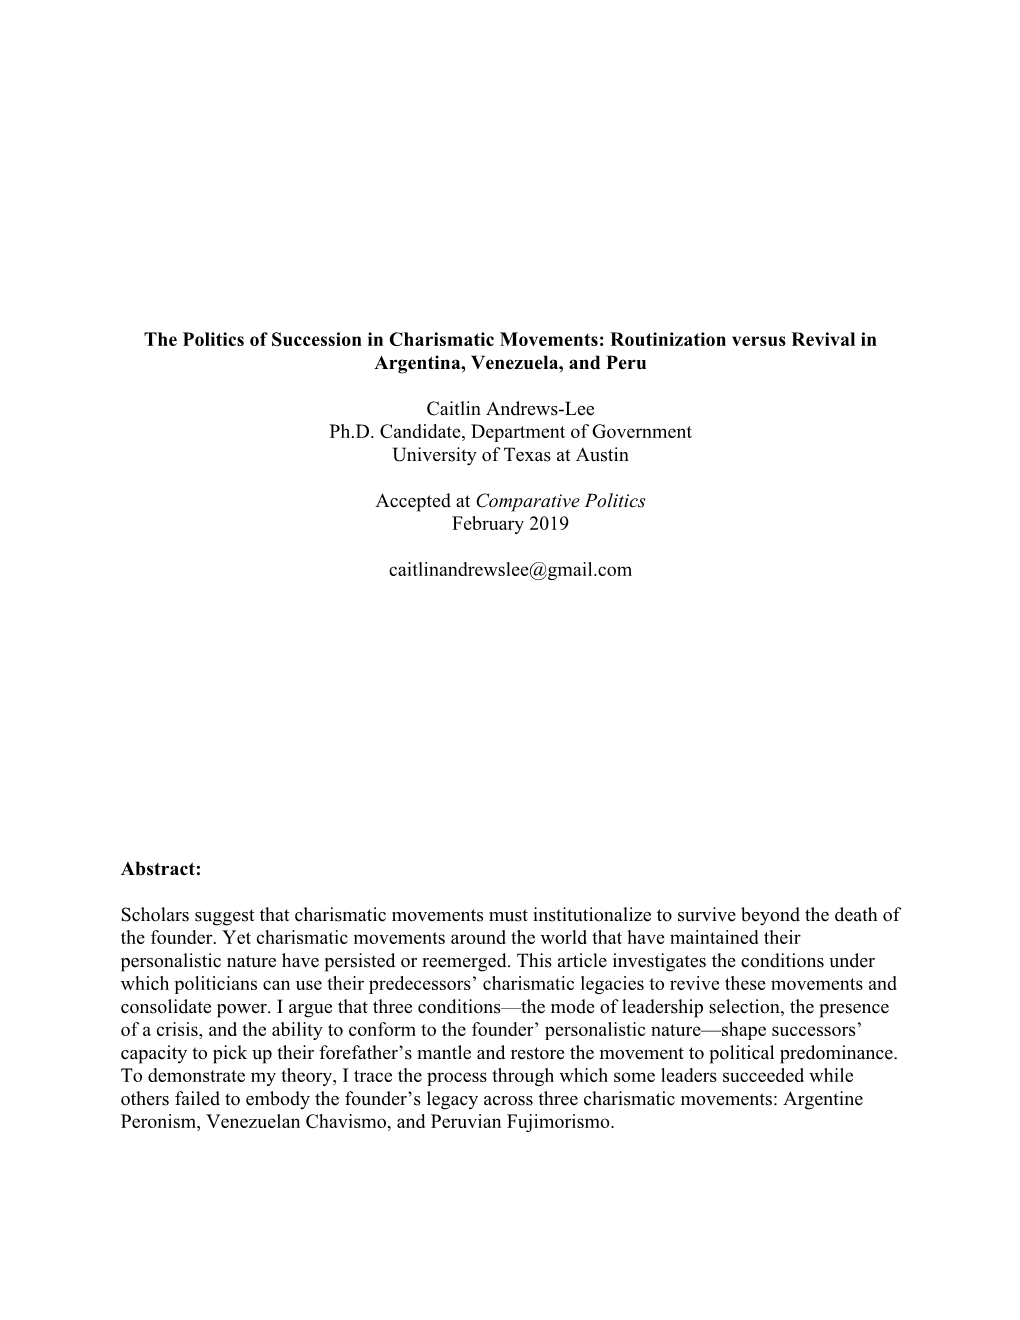 The Politics of Succession in Charismatic Movements: Routinization Versus Revival in Argentina, Venezuela, and Peru